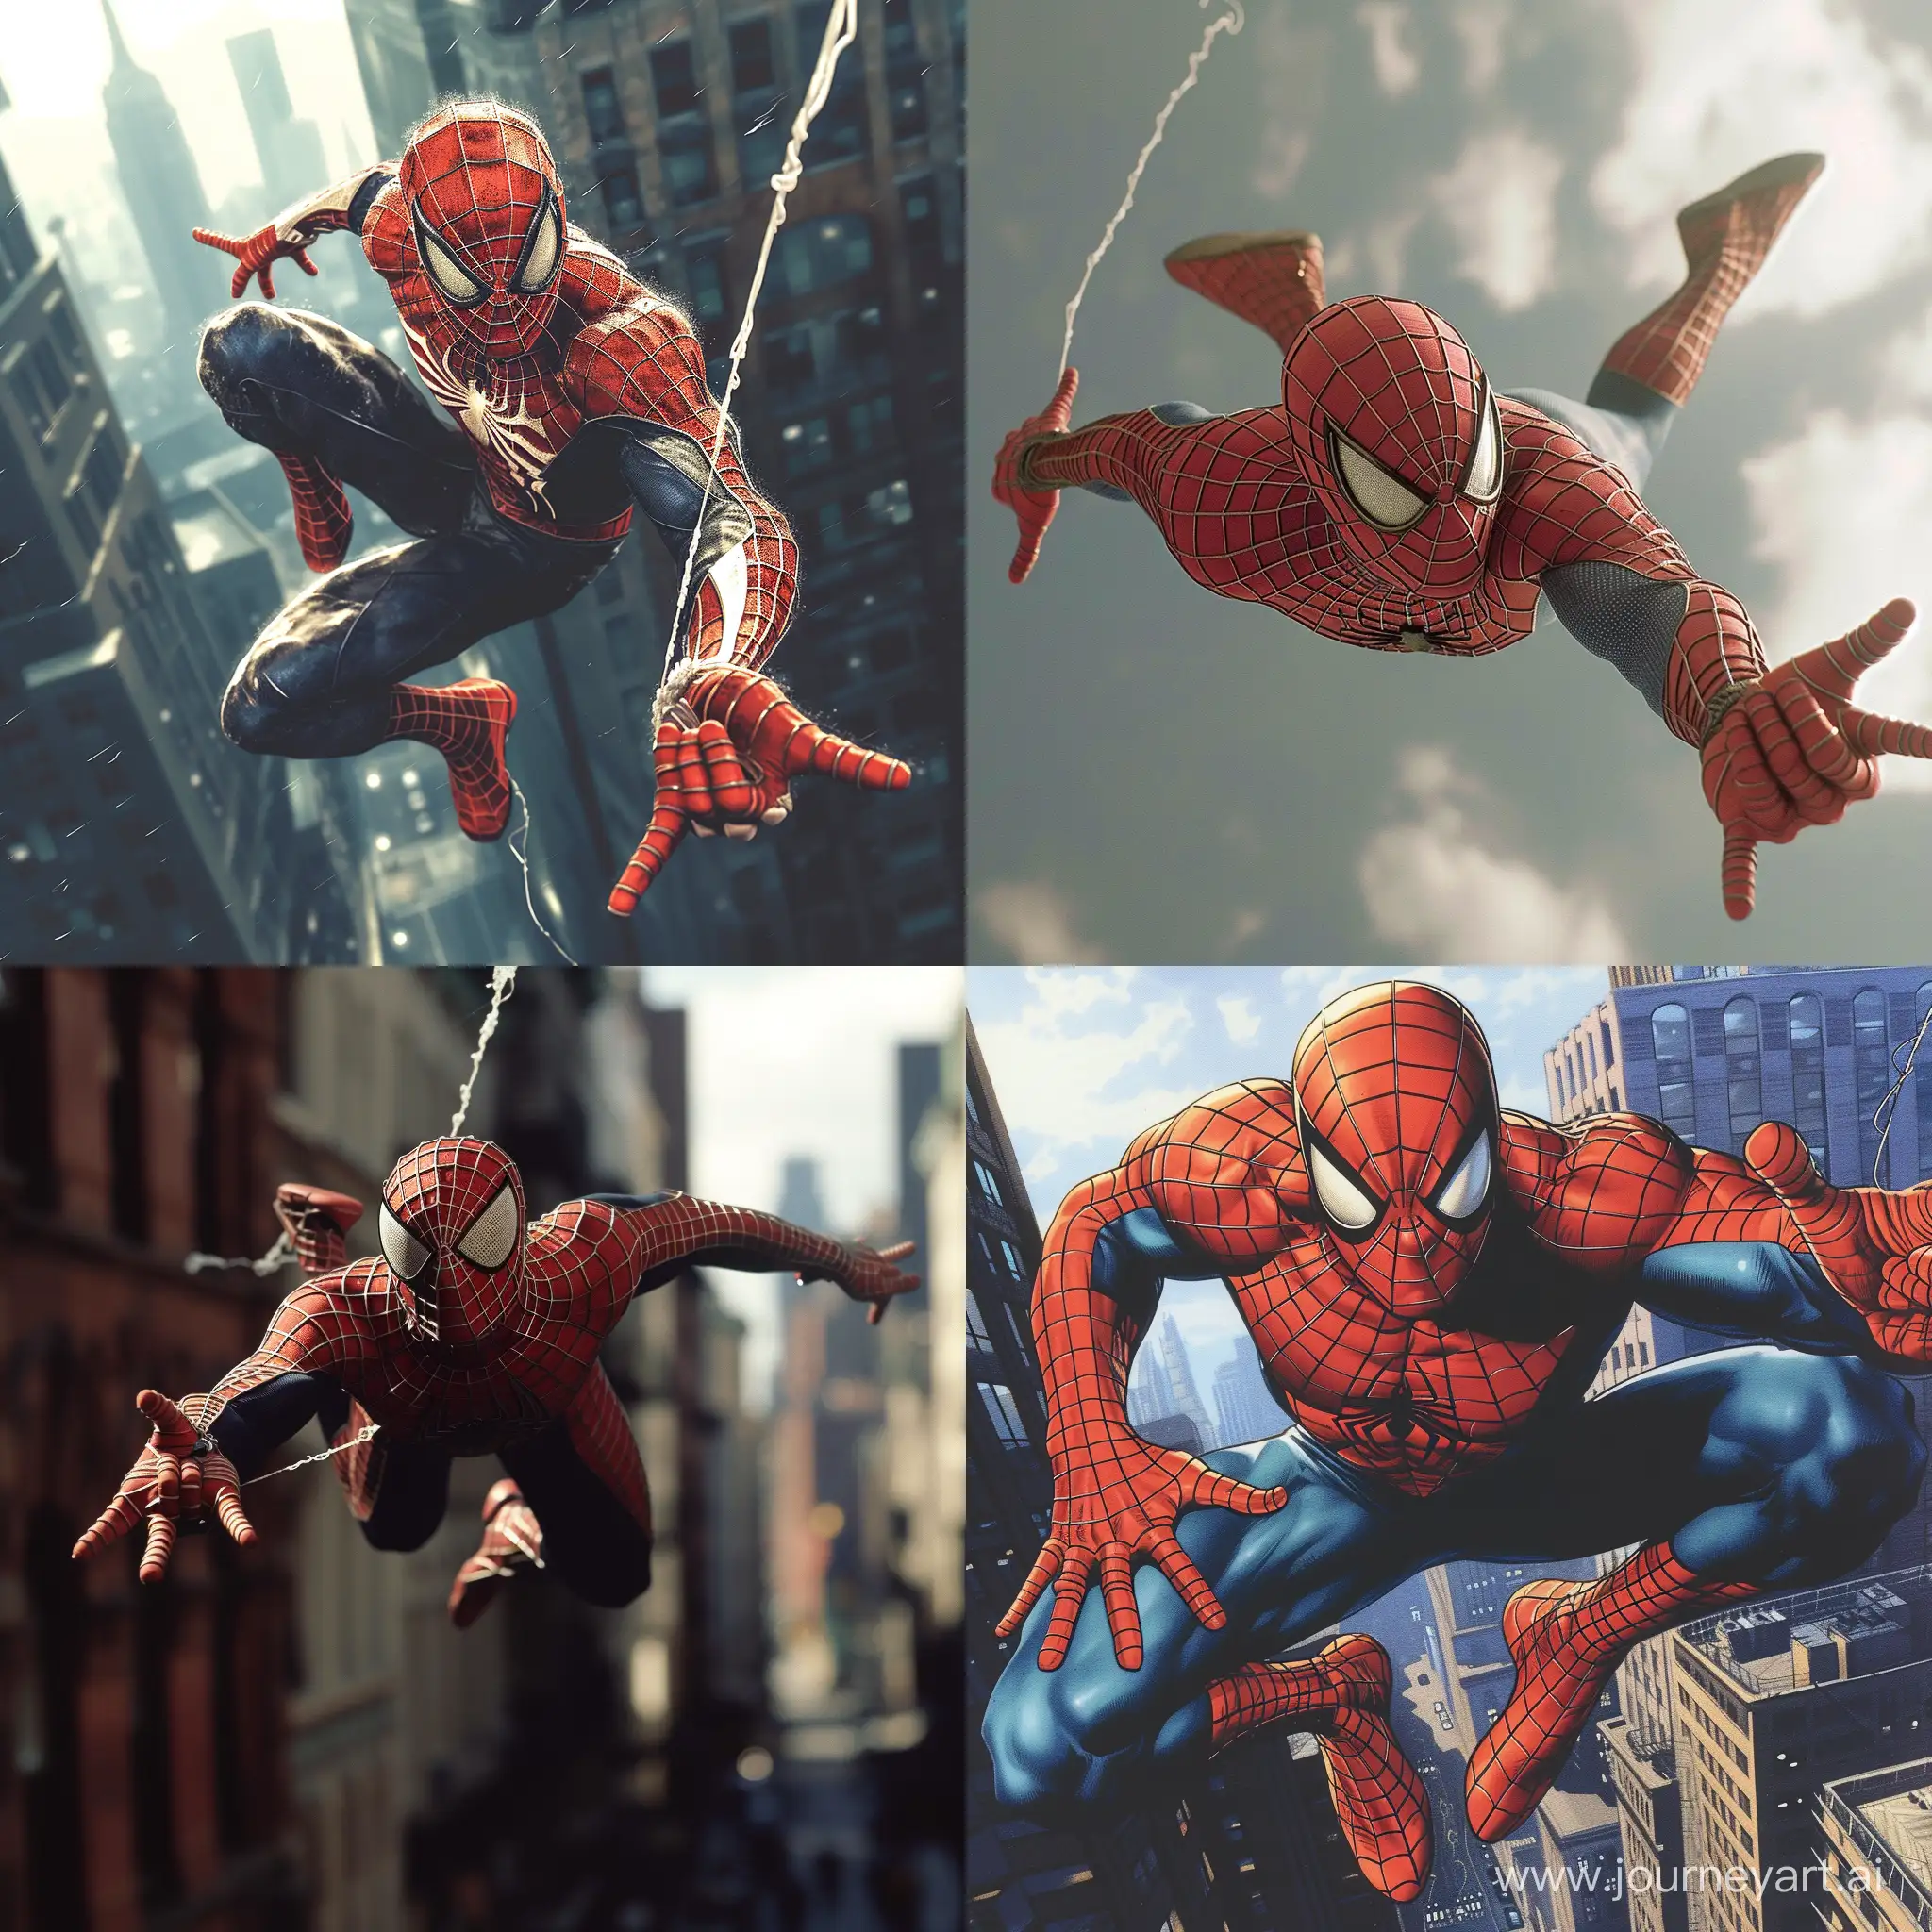 Aerial-Acrobatics-Superhero-Inspired-by-SpiderMan-in-Marvel-Comics-Style